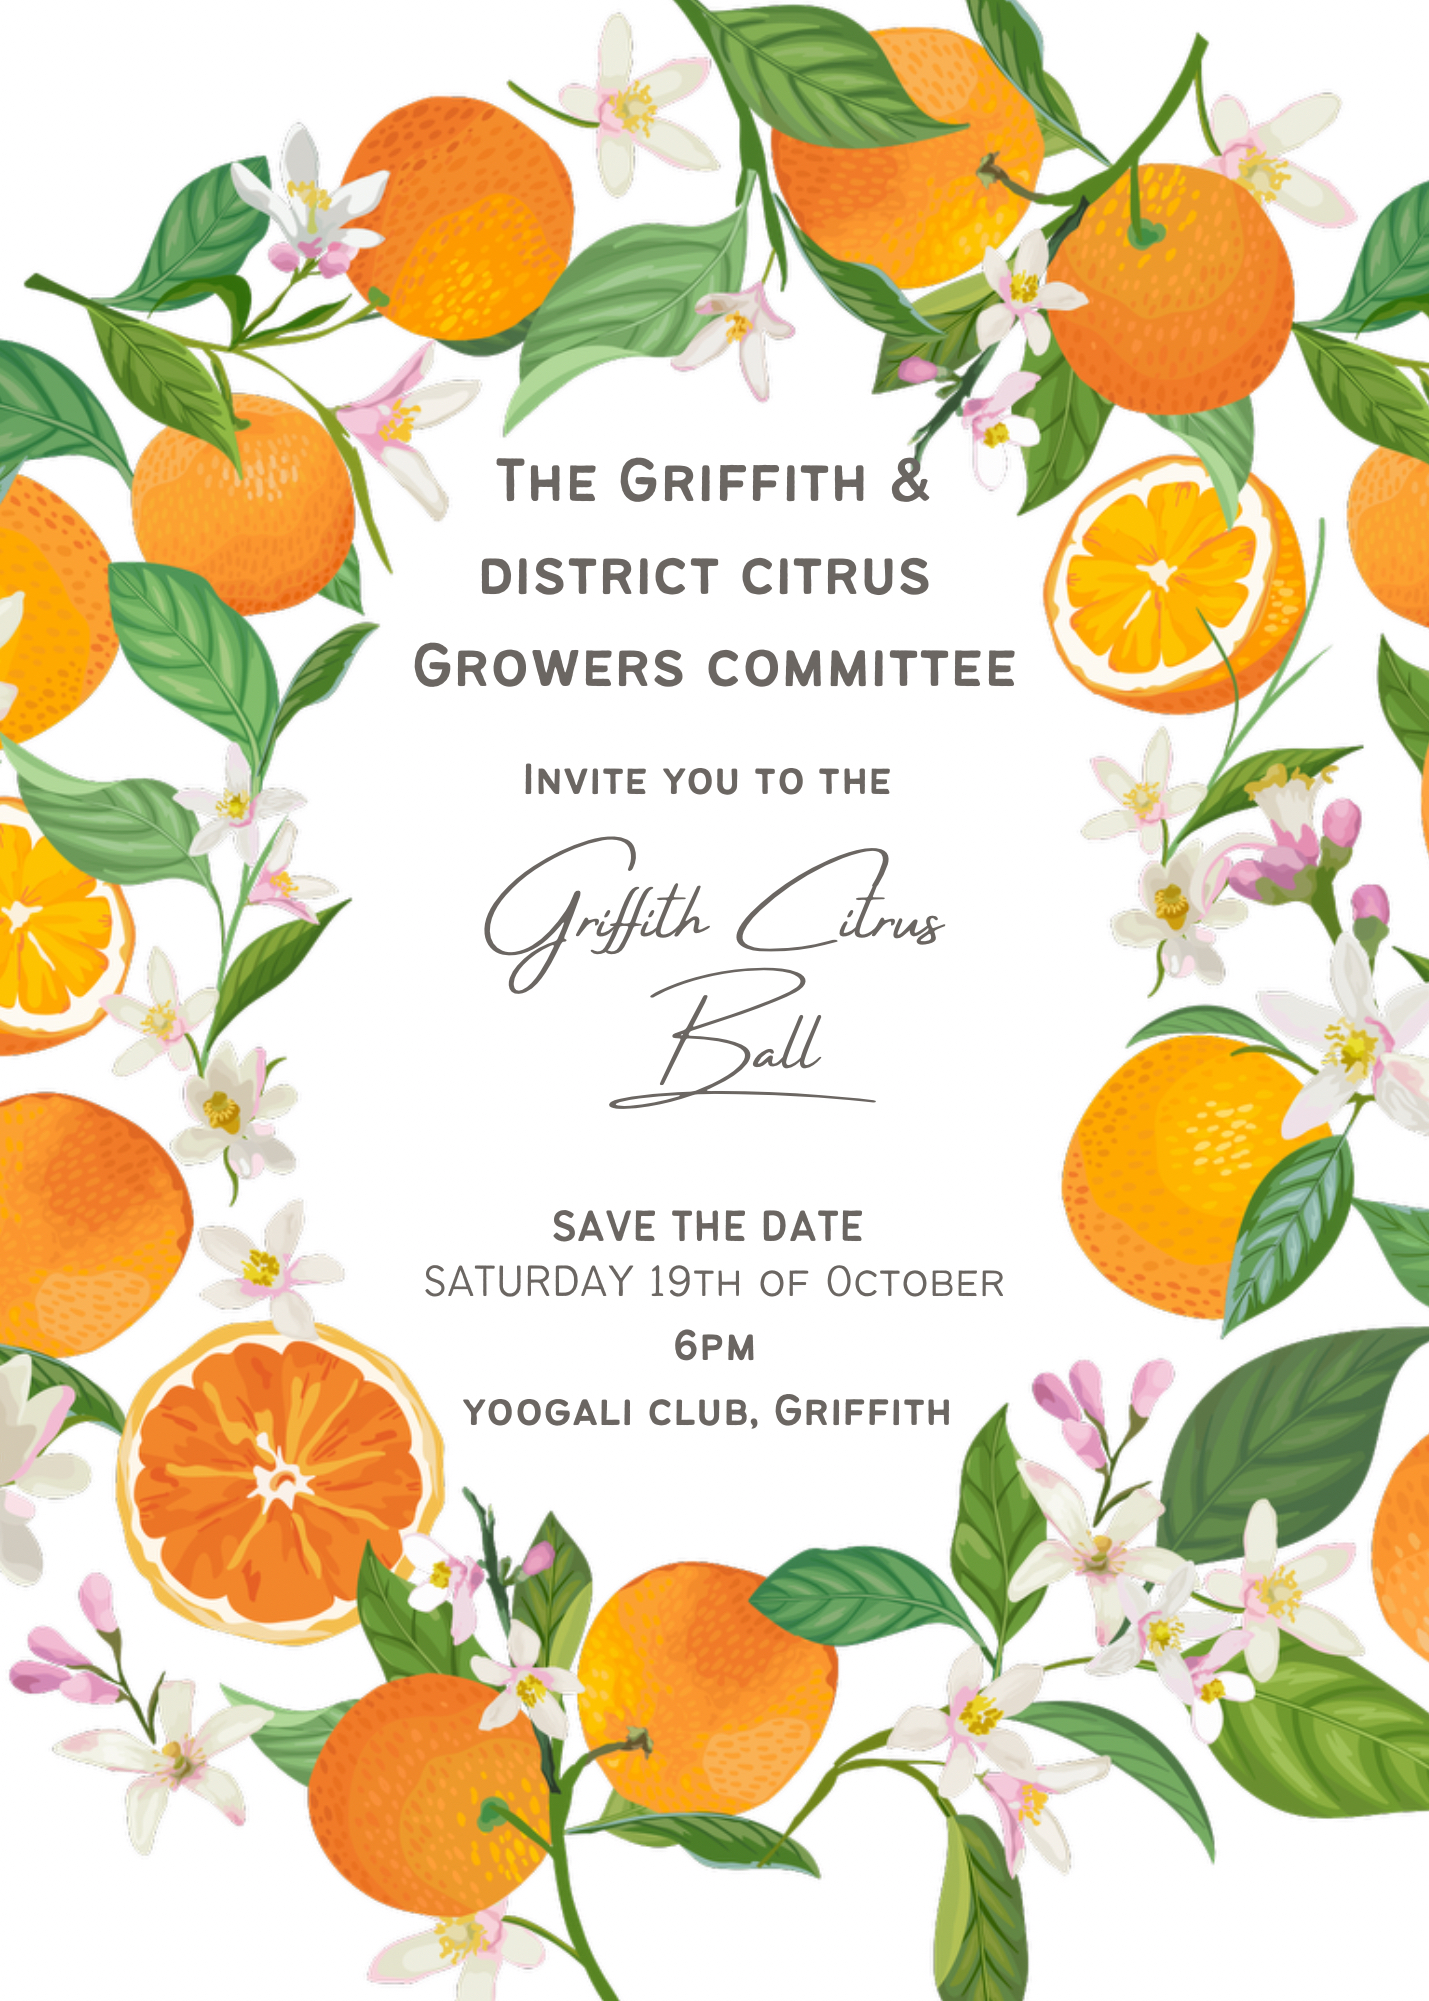 Invite to Griffith Citrus Ball